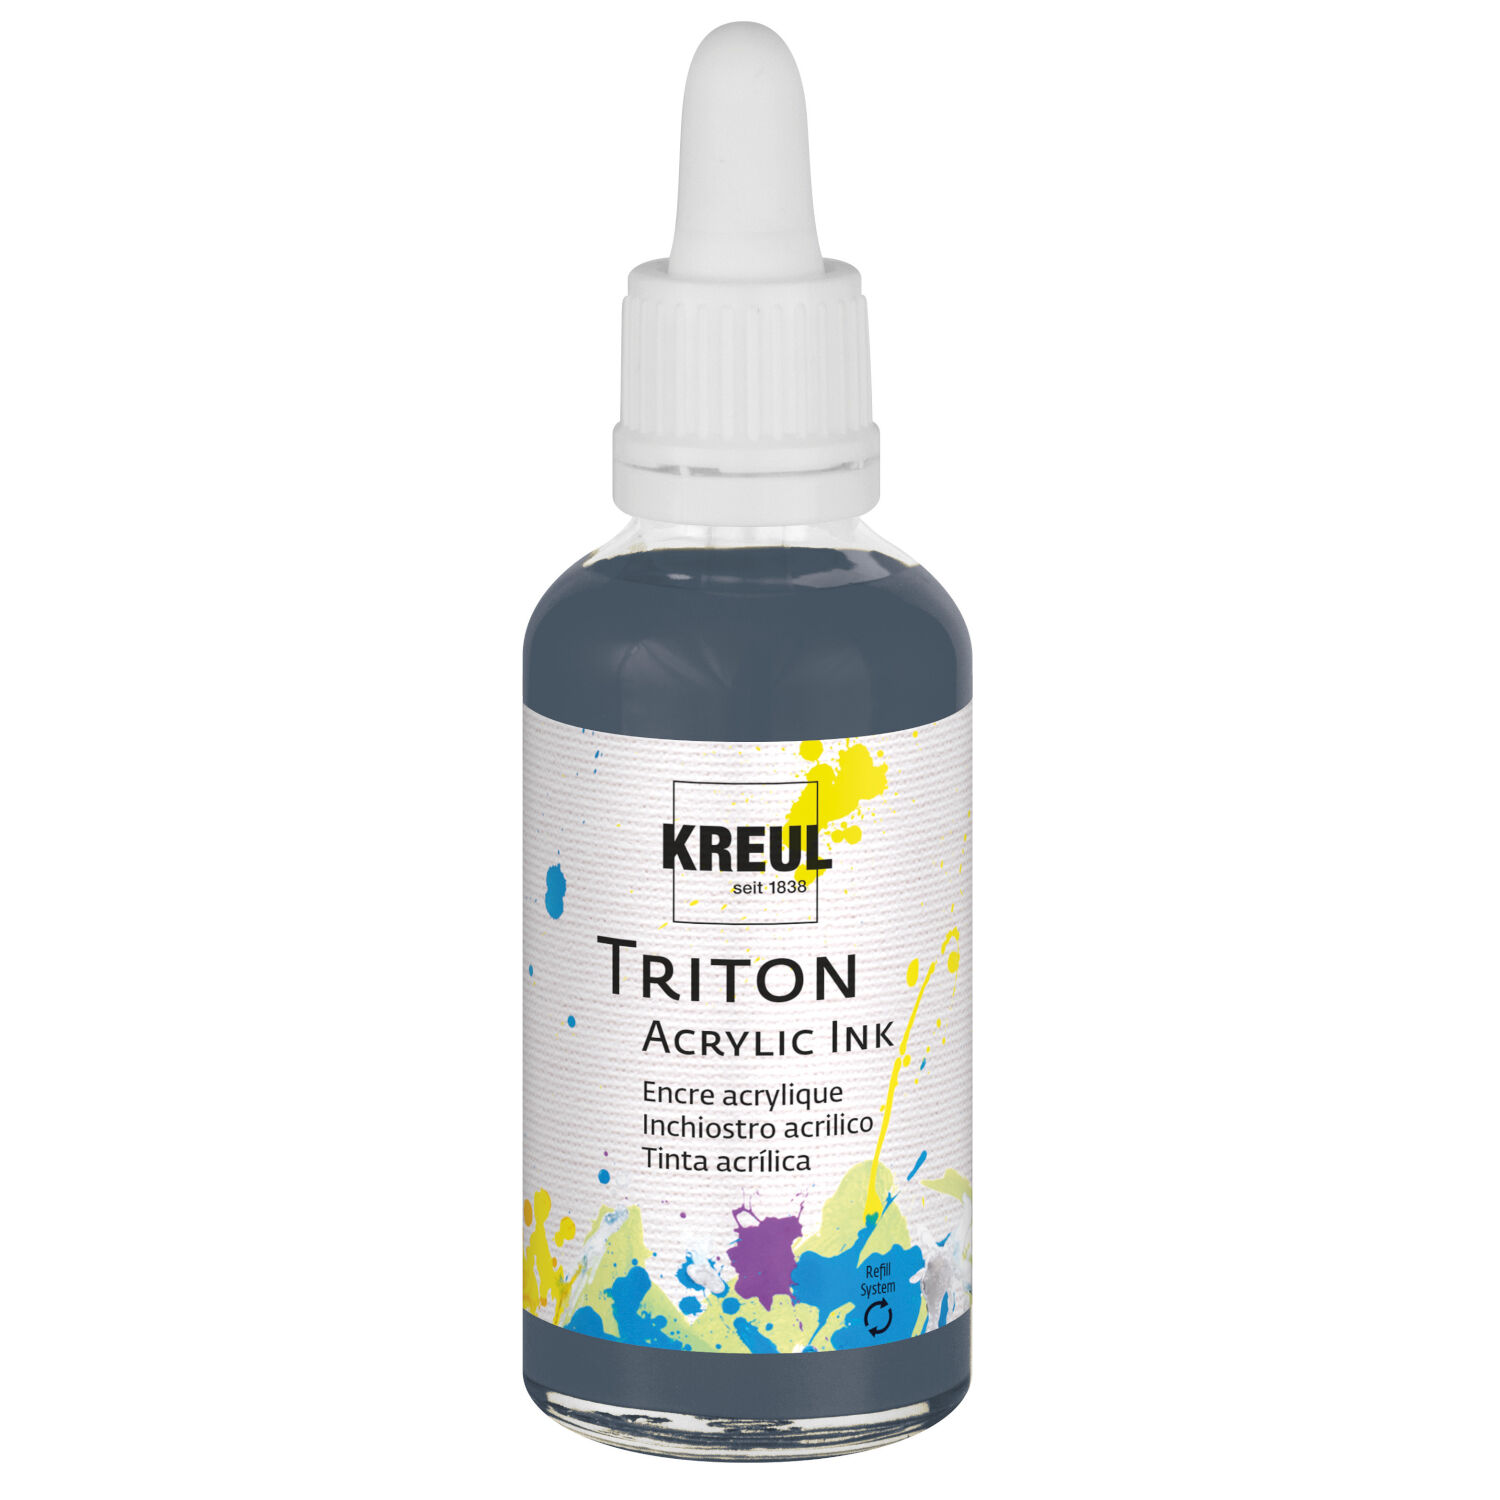 NEU KREUL Triton Acrylic Ink Graphite, 50 ml